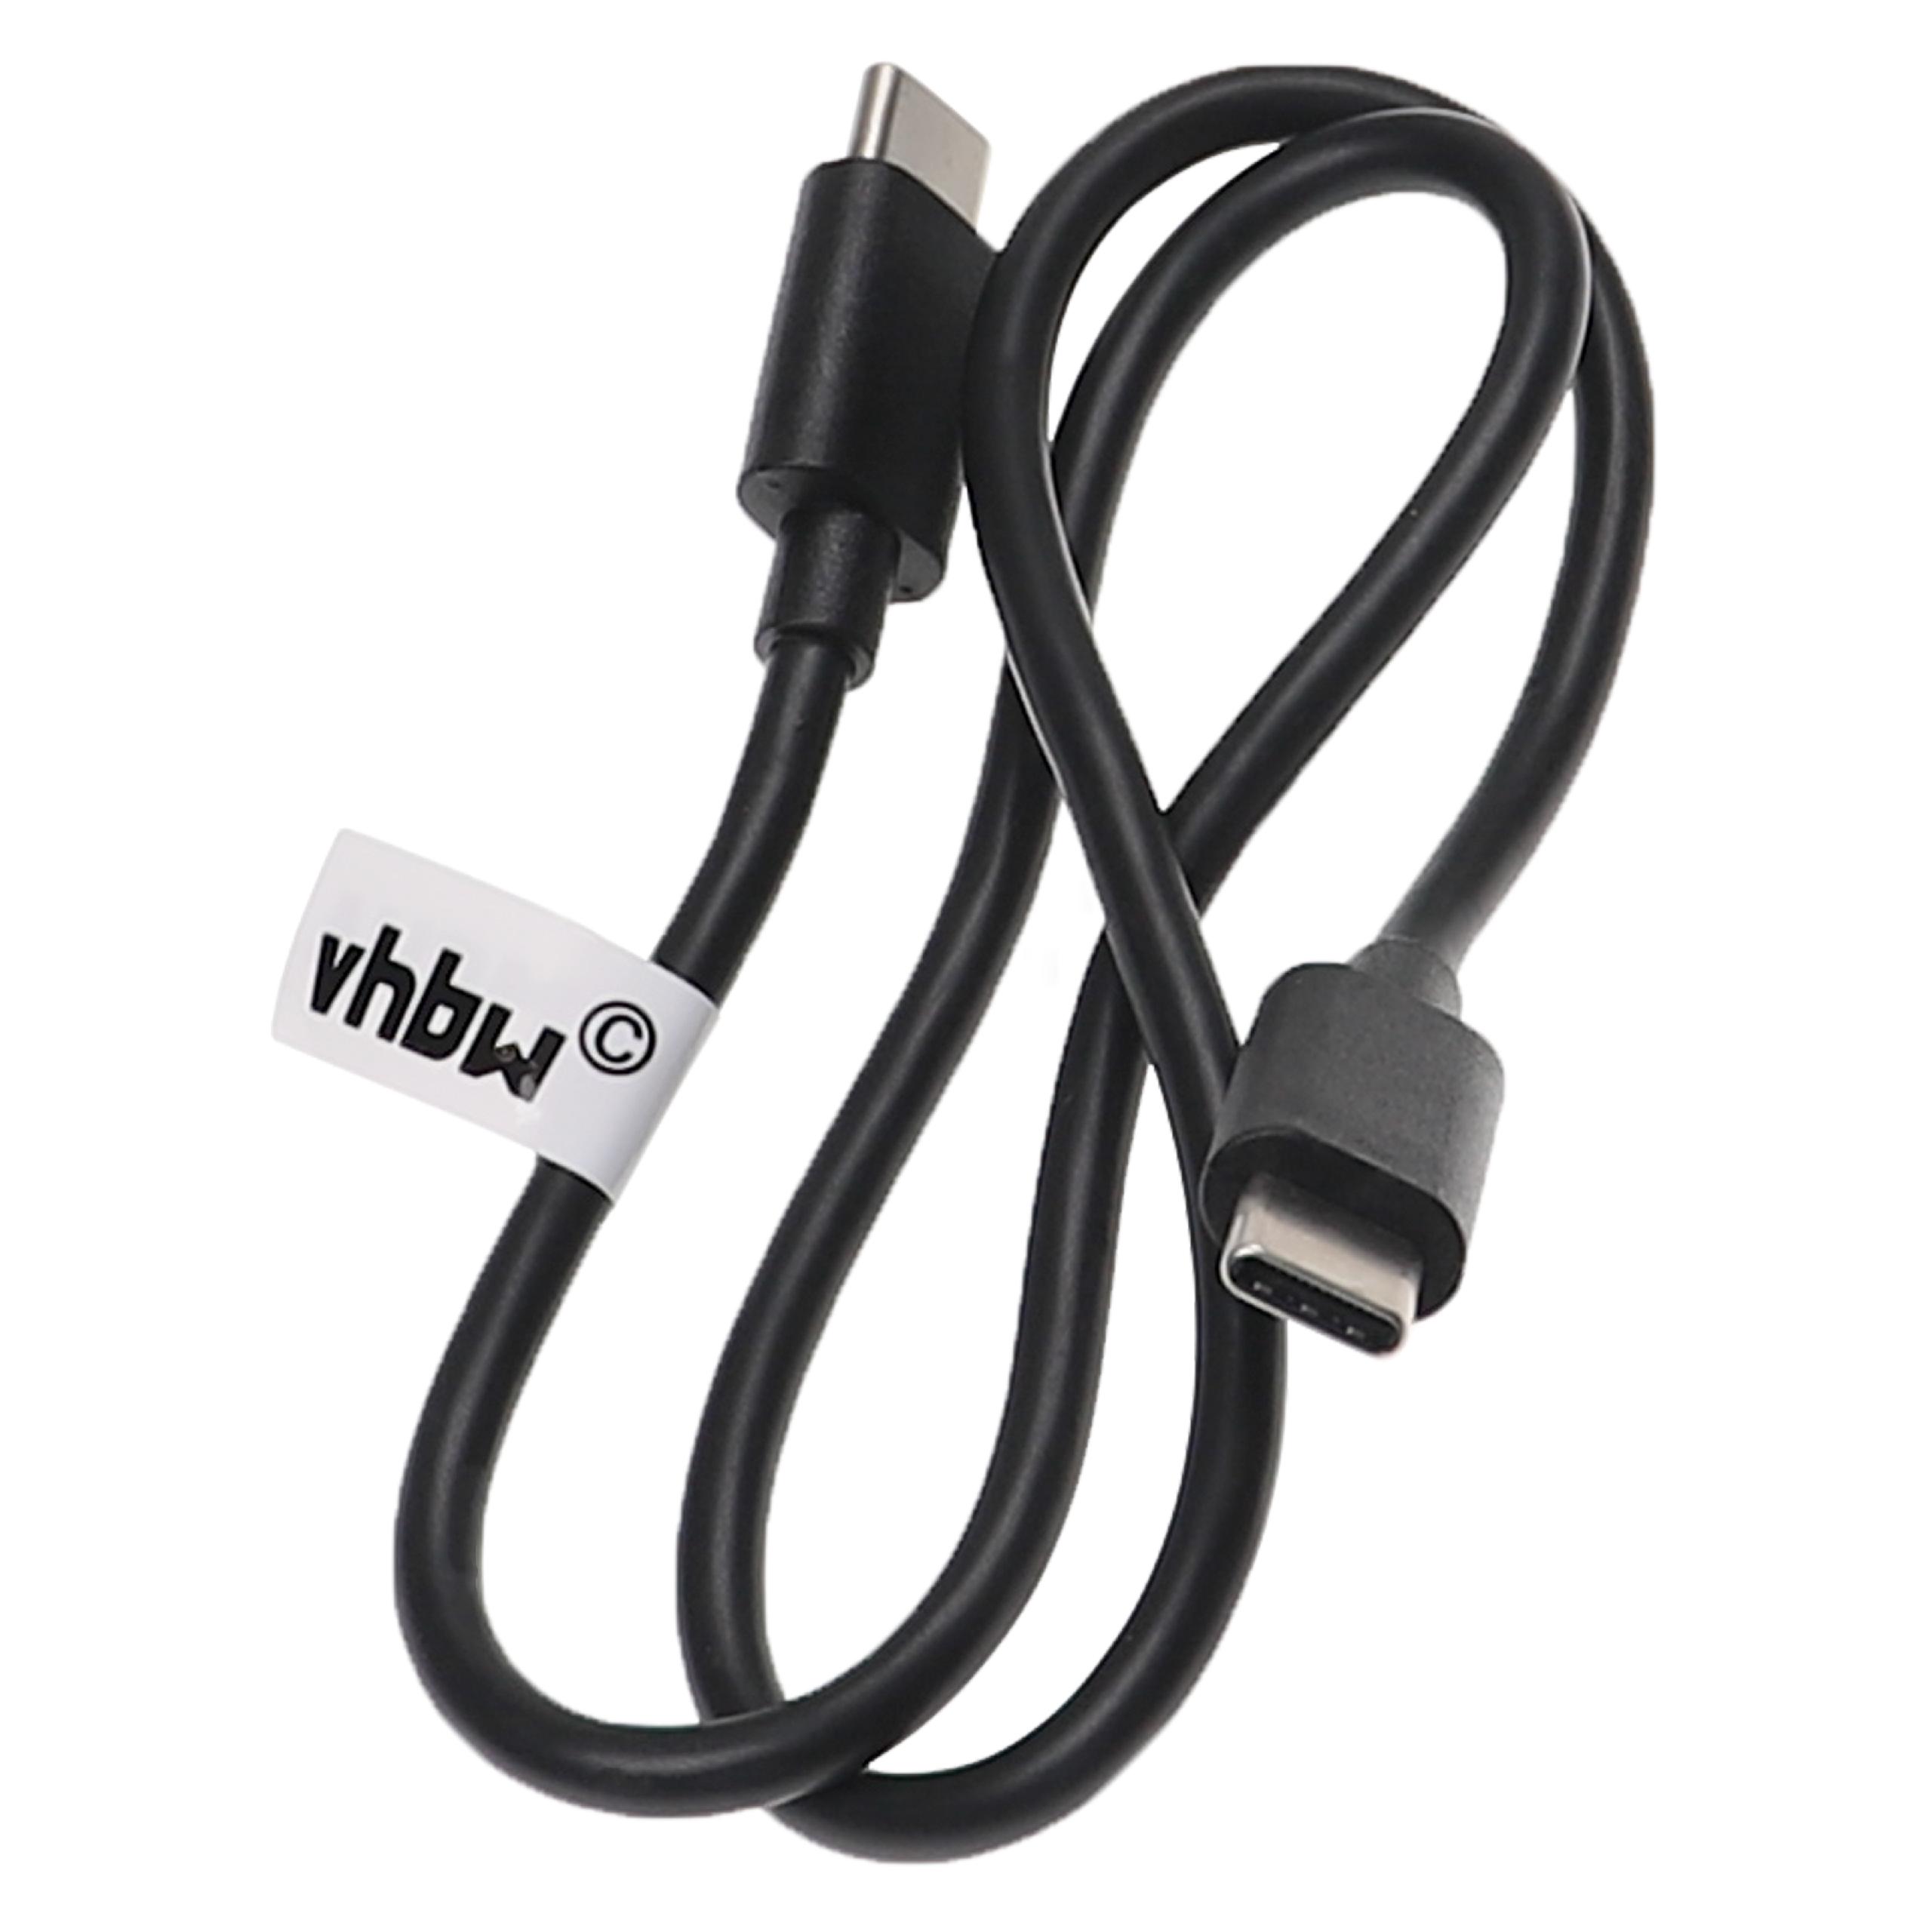 USB Schnell-Ladekabel passend für diverse Laptops, Tablets, Smartphones - USB Kabel 50 cm Schwarz